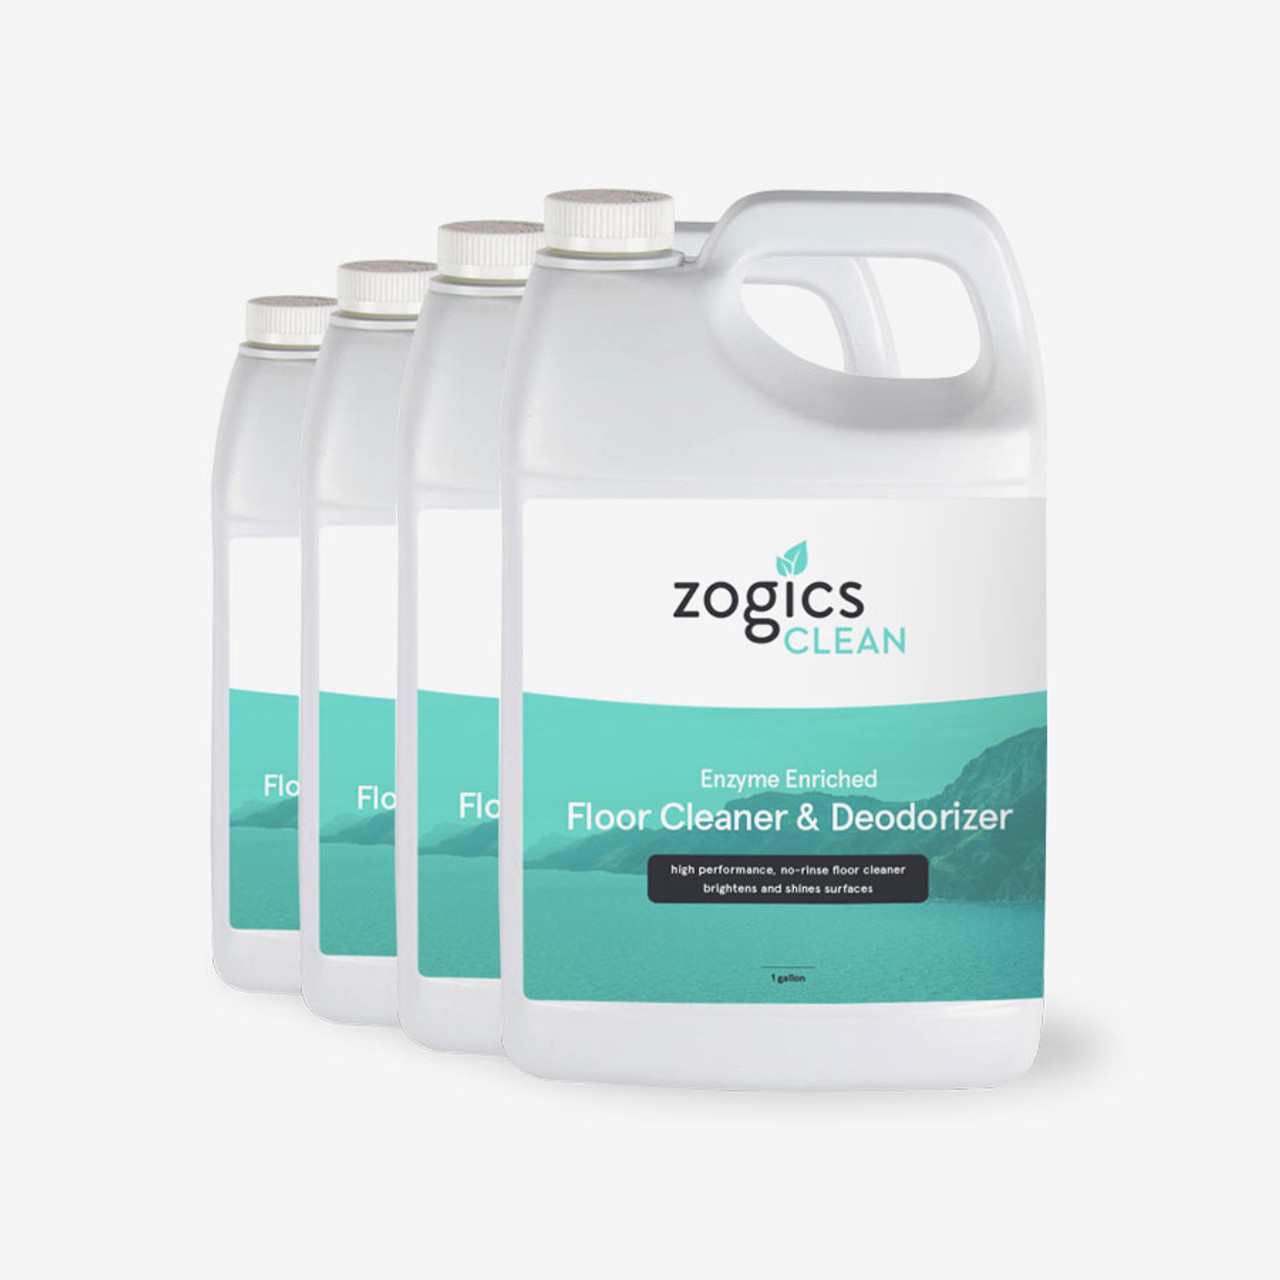 Try Zogics Restroom Cleaners Sampler Case